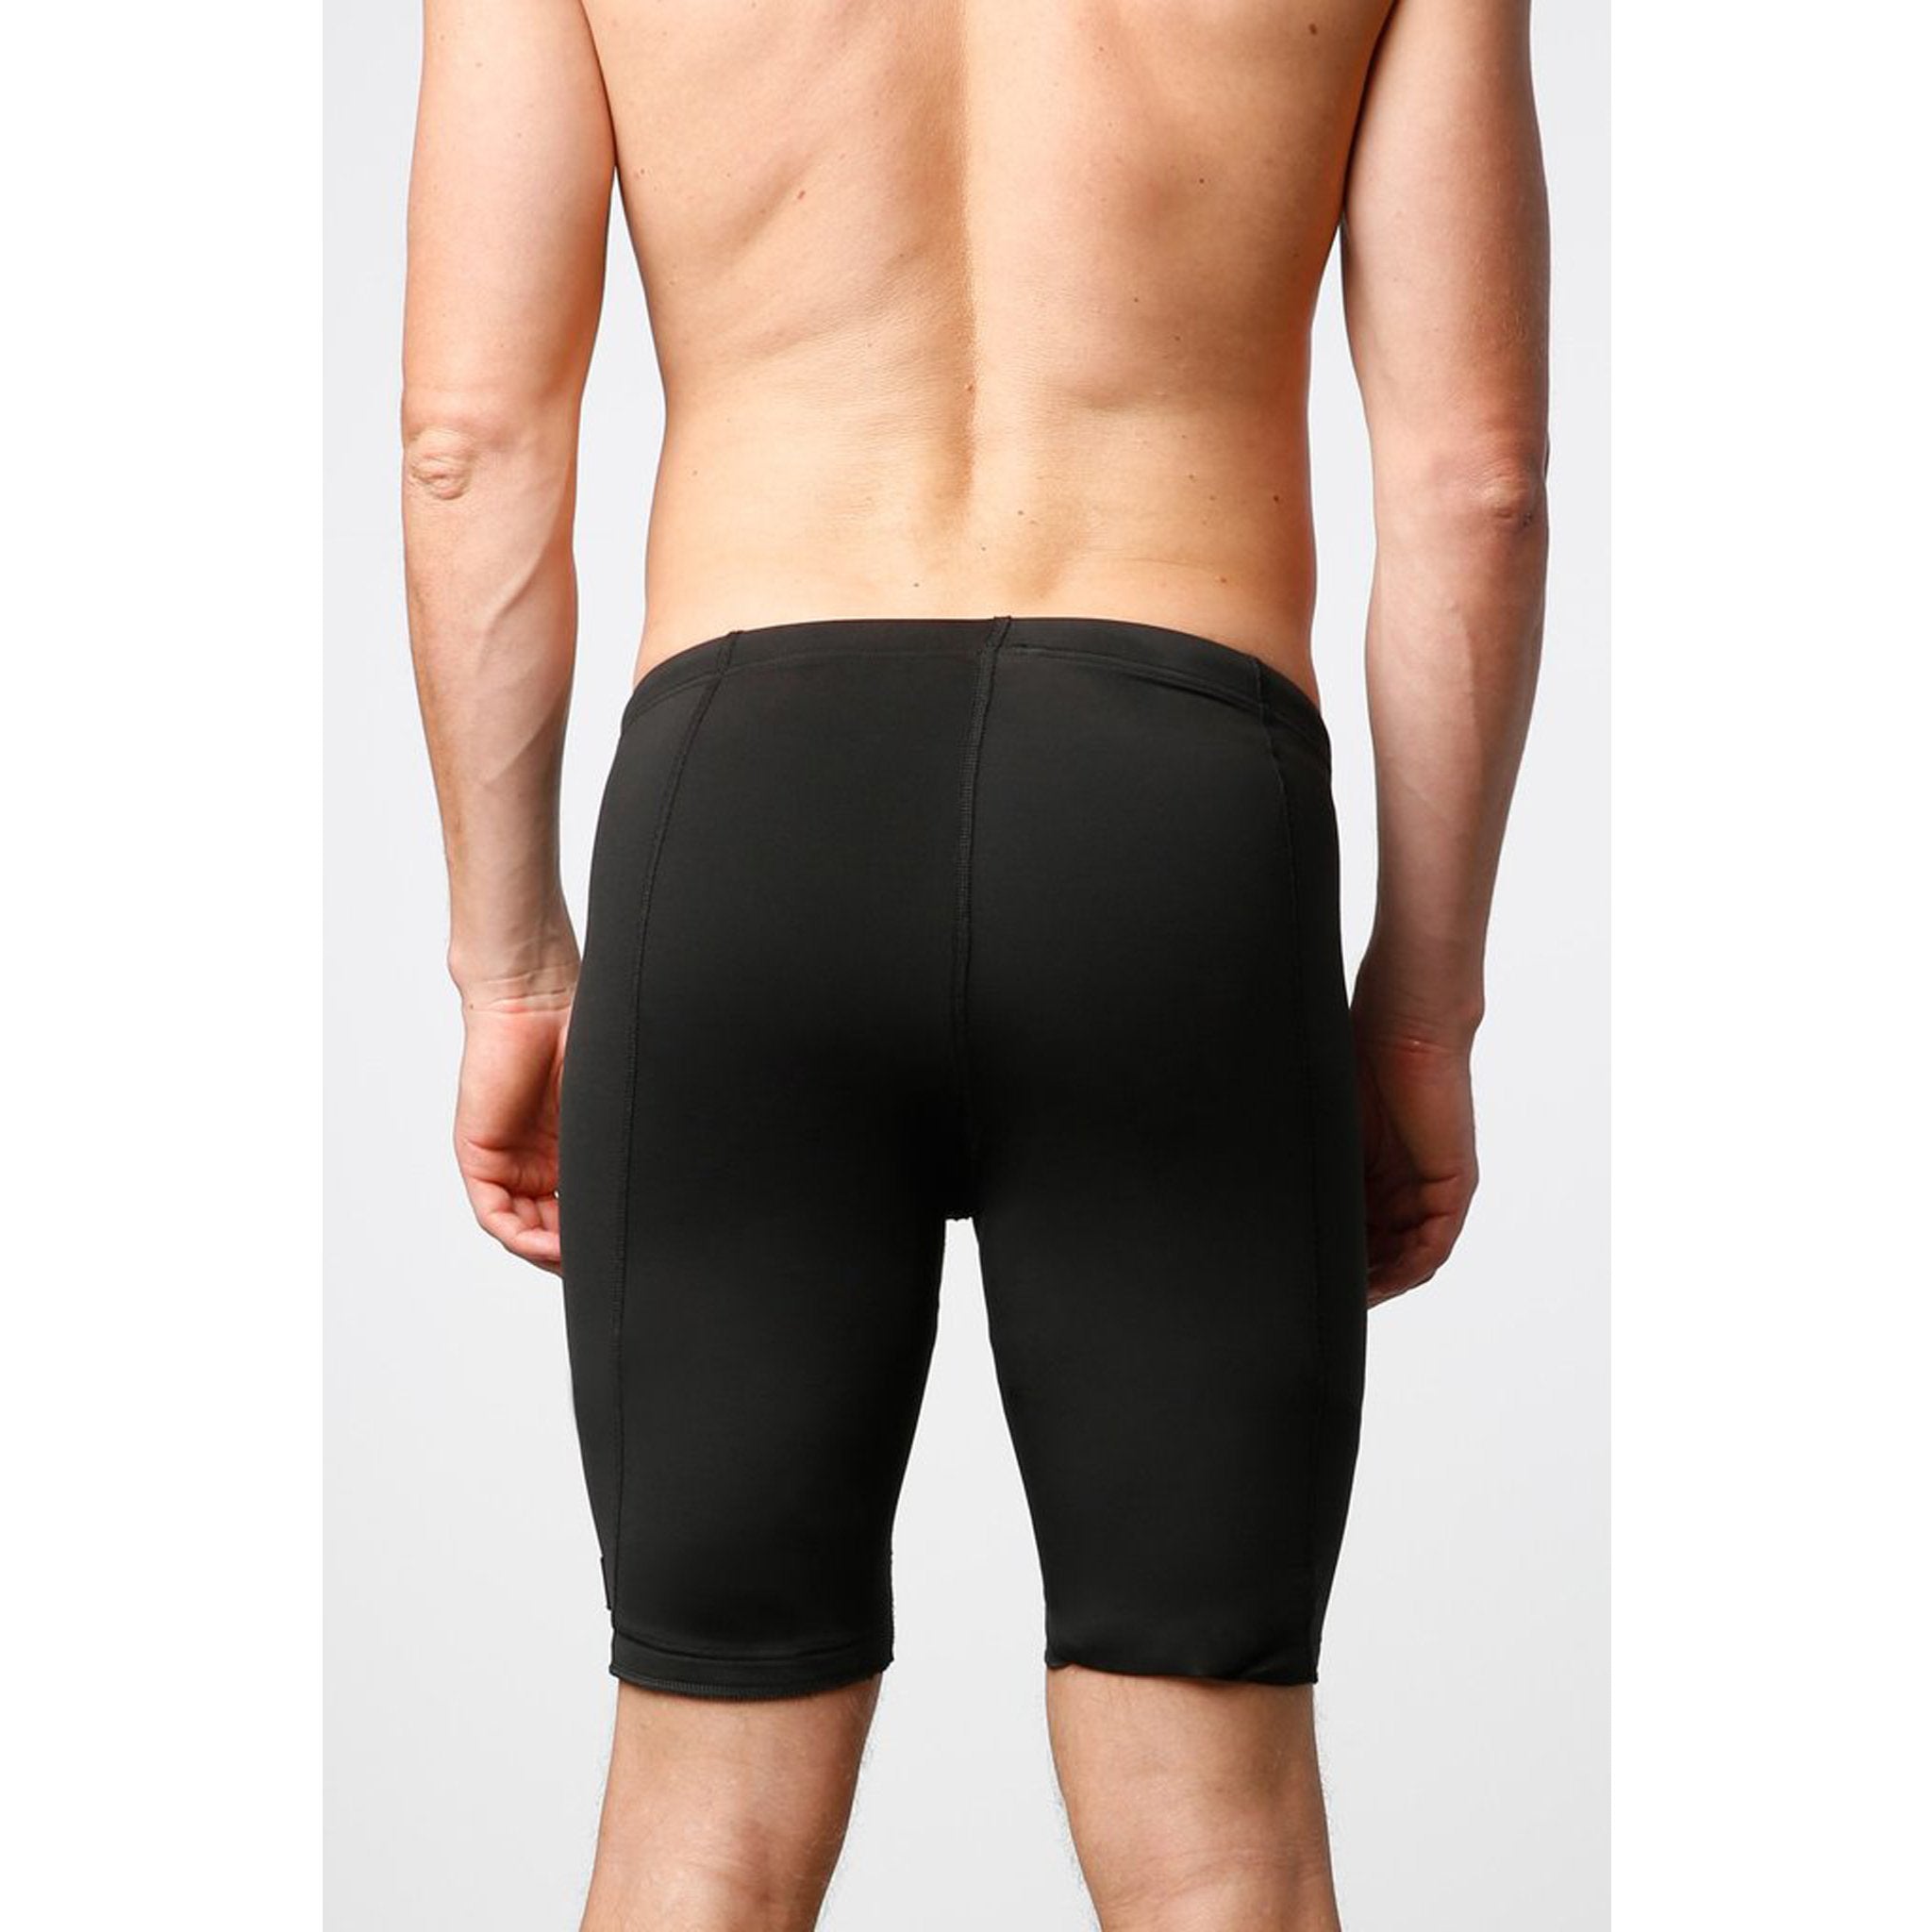 P361 Long Shorts With 6 Panels, Drawstring & Grippers (Unisex)-Pants-Snorkeling, diver, sharkskin, scuba diving hk, warm protection, sharkskin, dive wear, bare wetsuit, aeroskin wetsuit, 浮潛